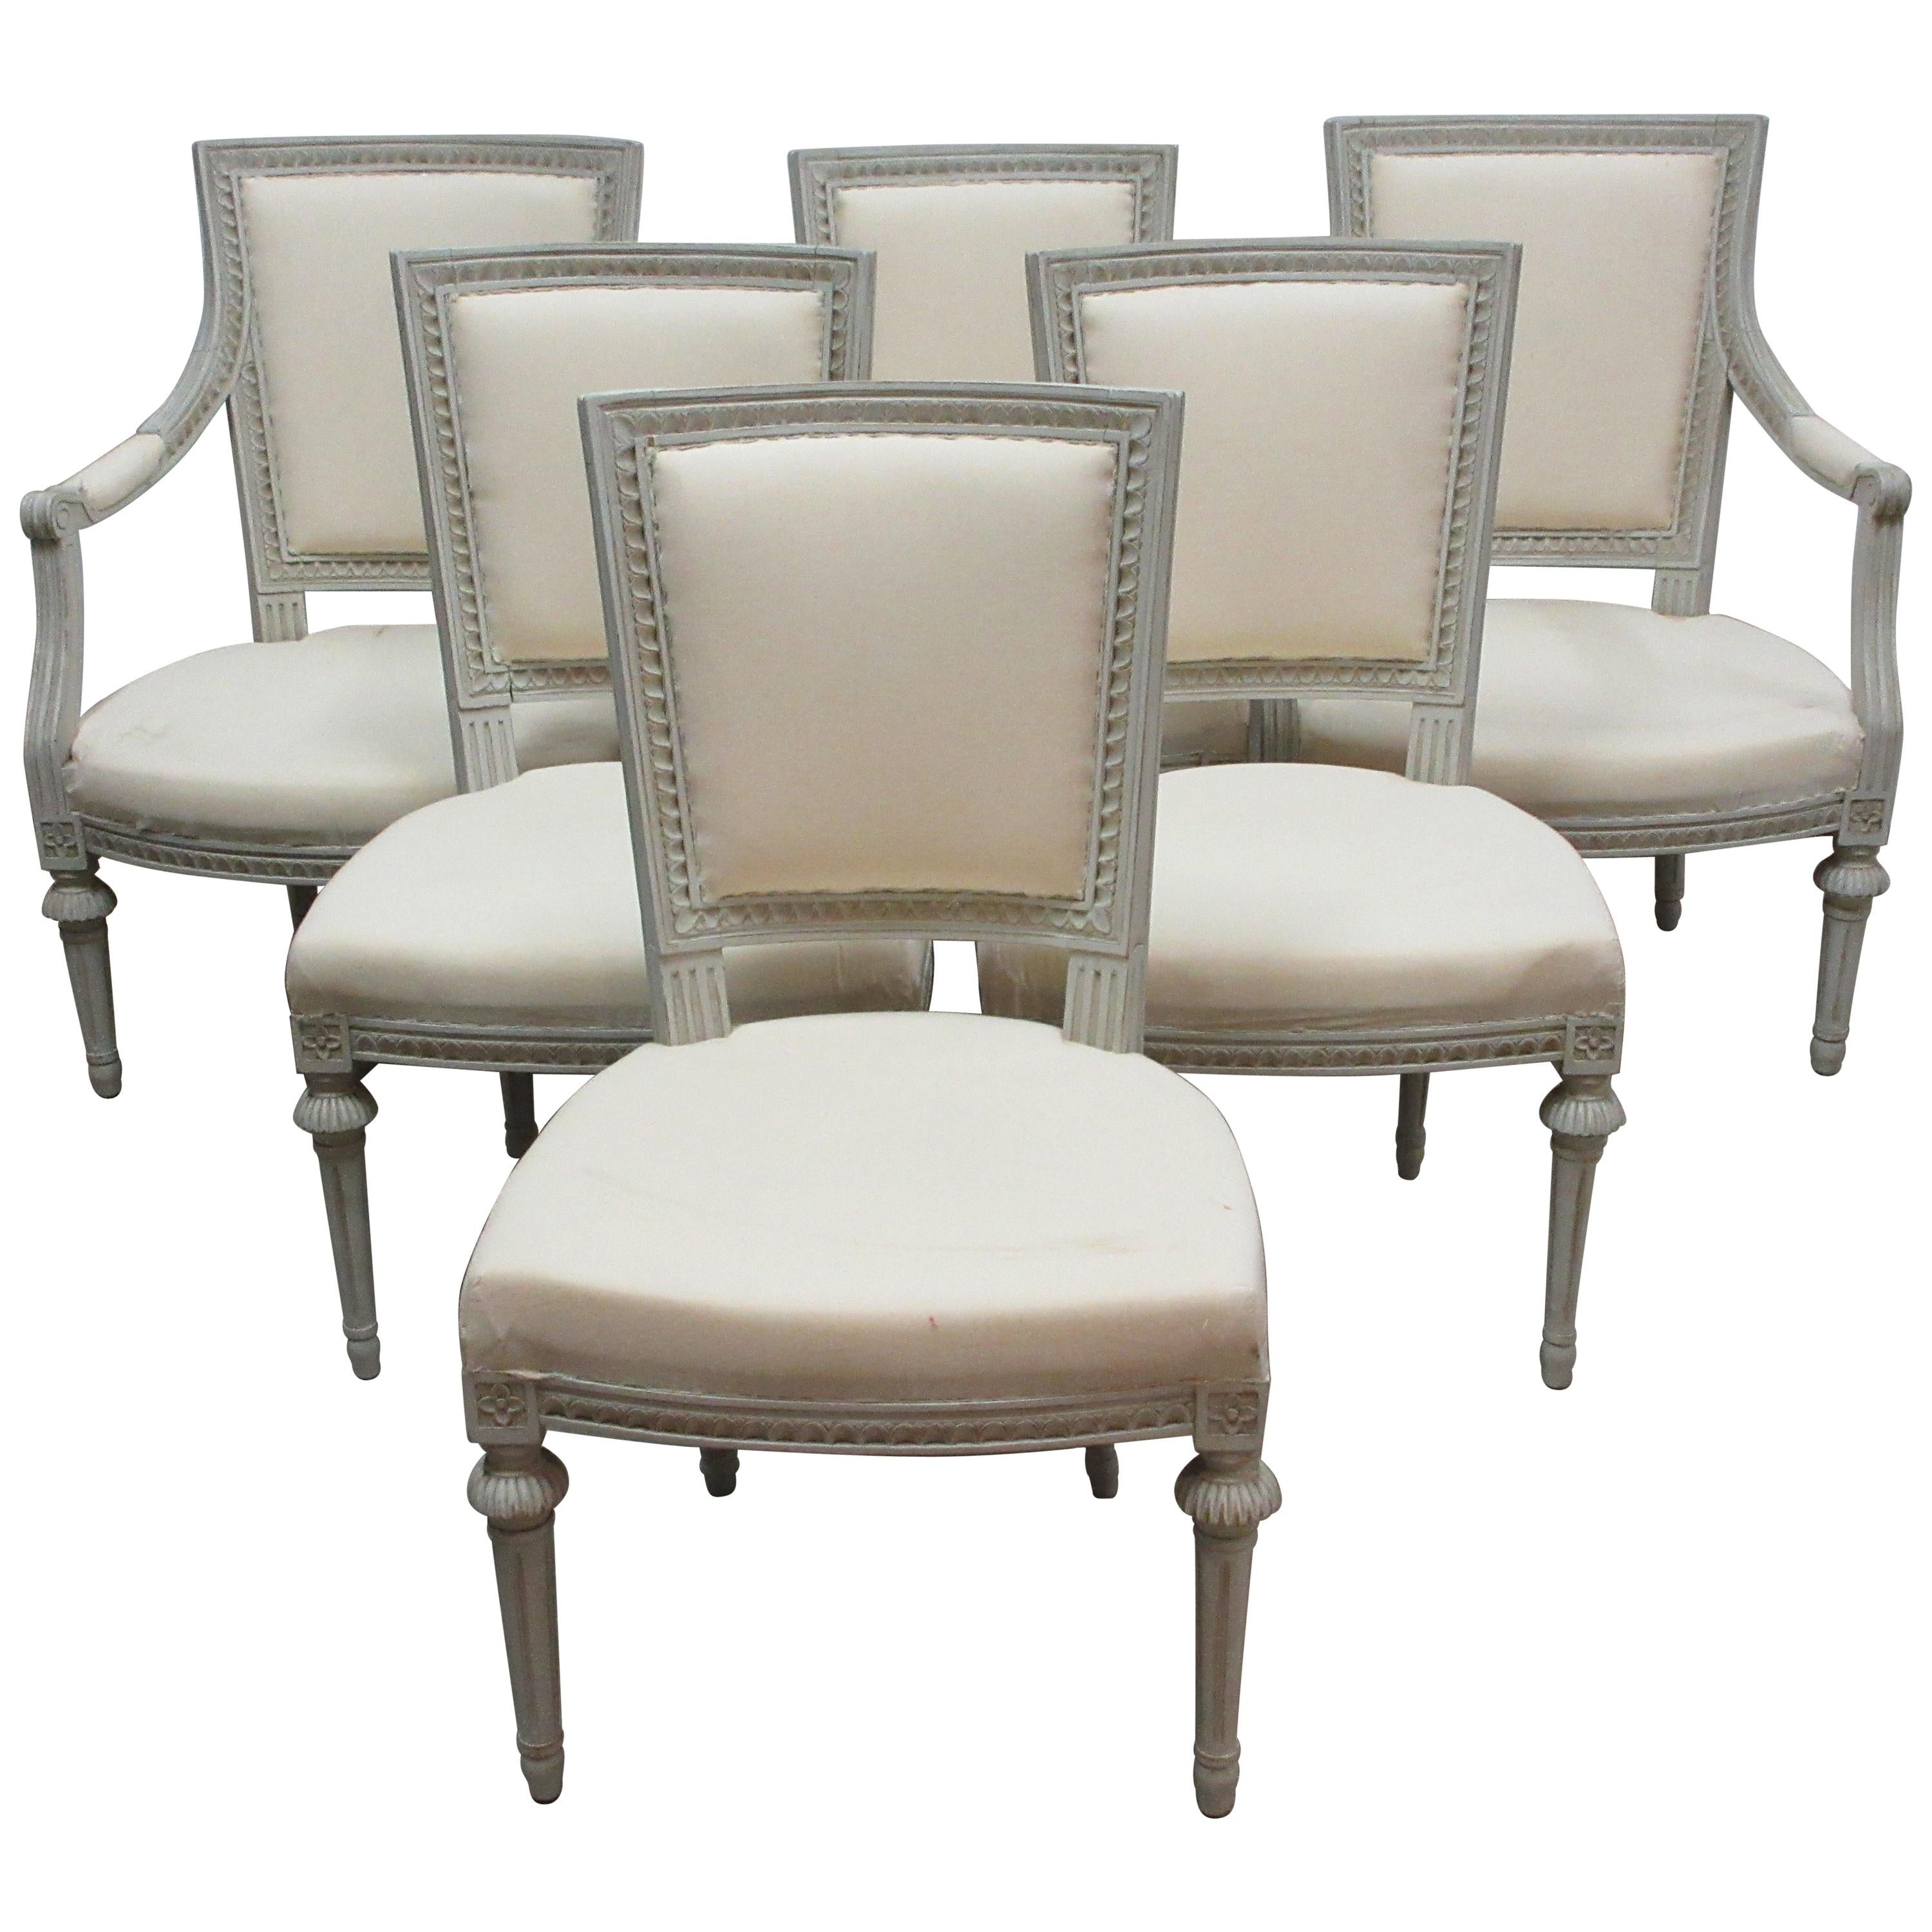 6 Swedish Gustavian Dining Room Chairs